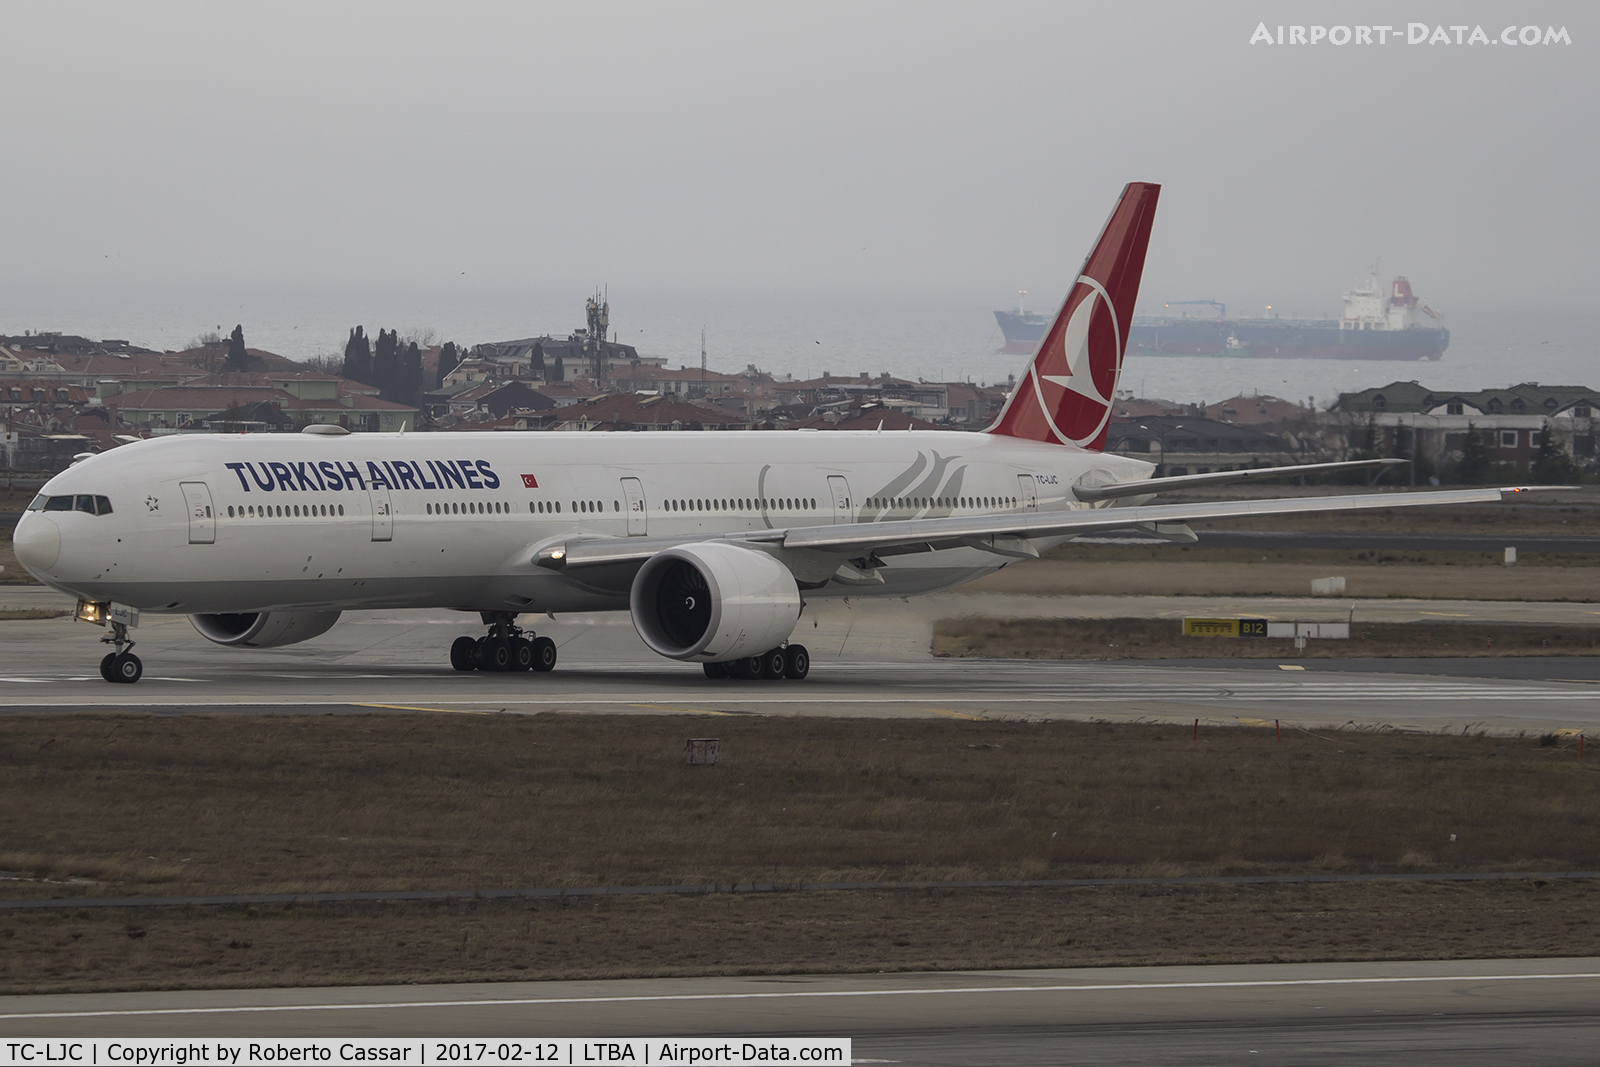 TC-LJC, 2015 Boeing 777-3F2/ER C/N 44123, Istanbul Ataturk